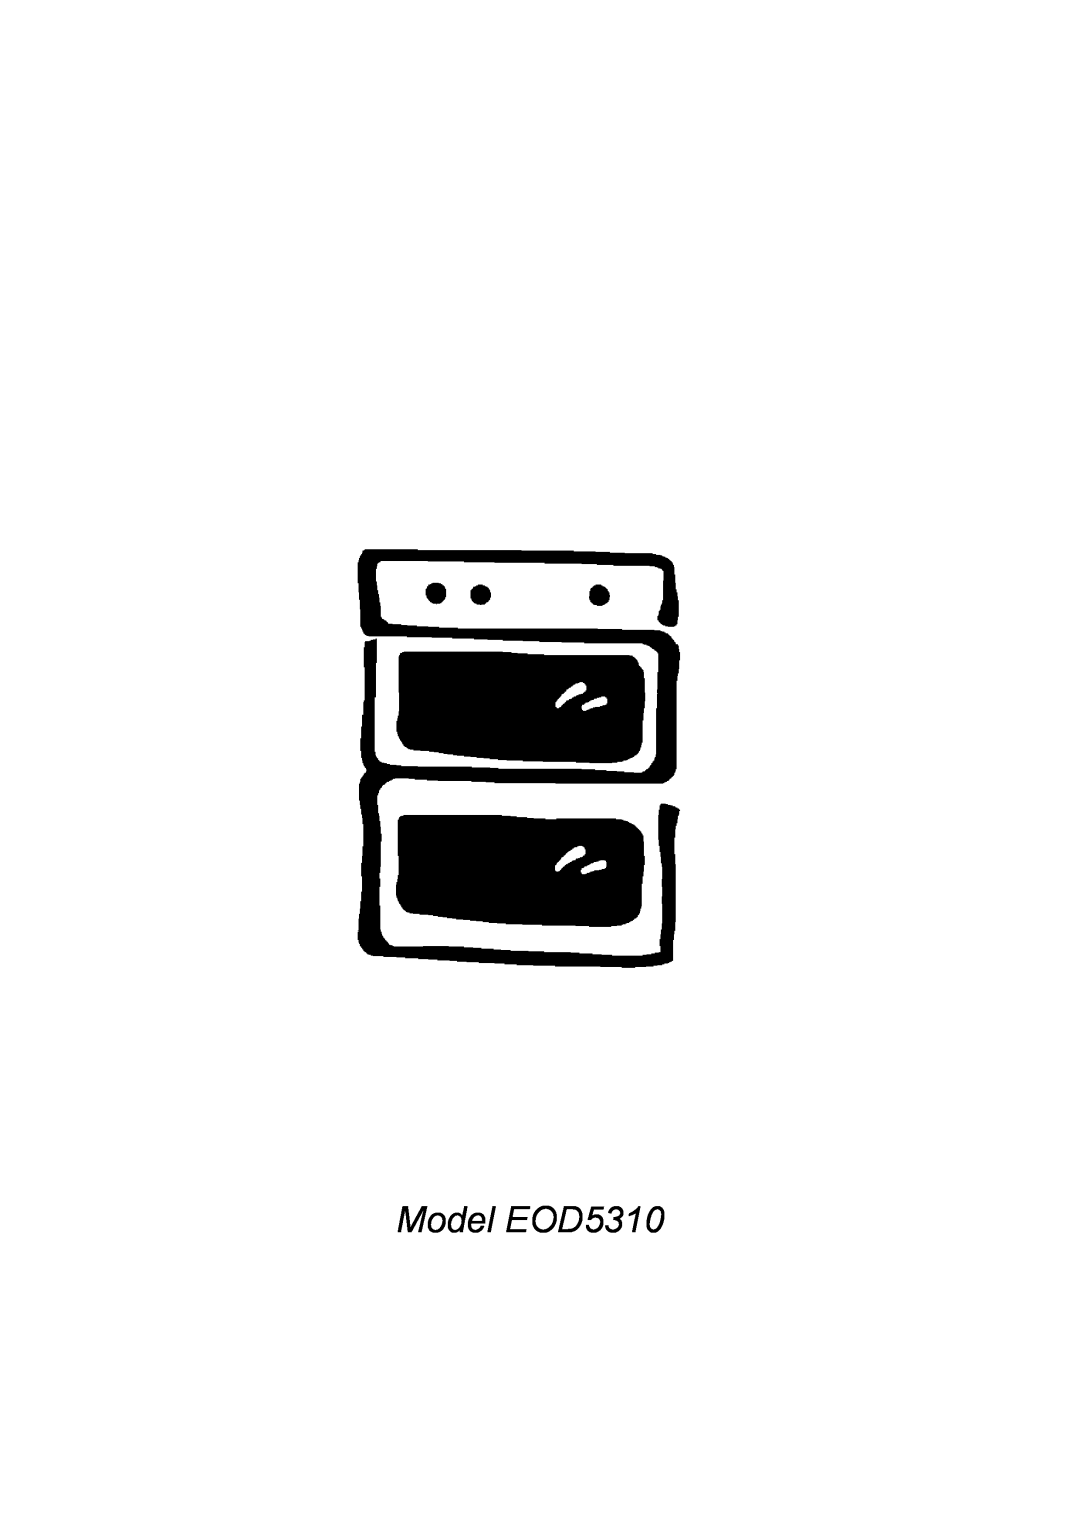 Electrolux manual Model EOD5310 